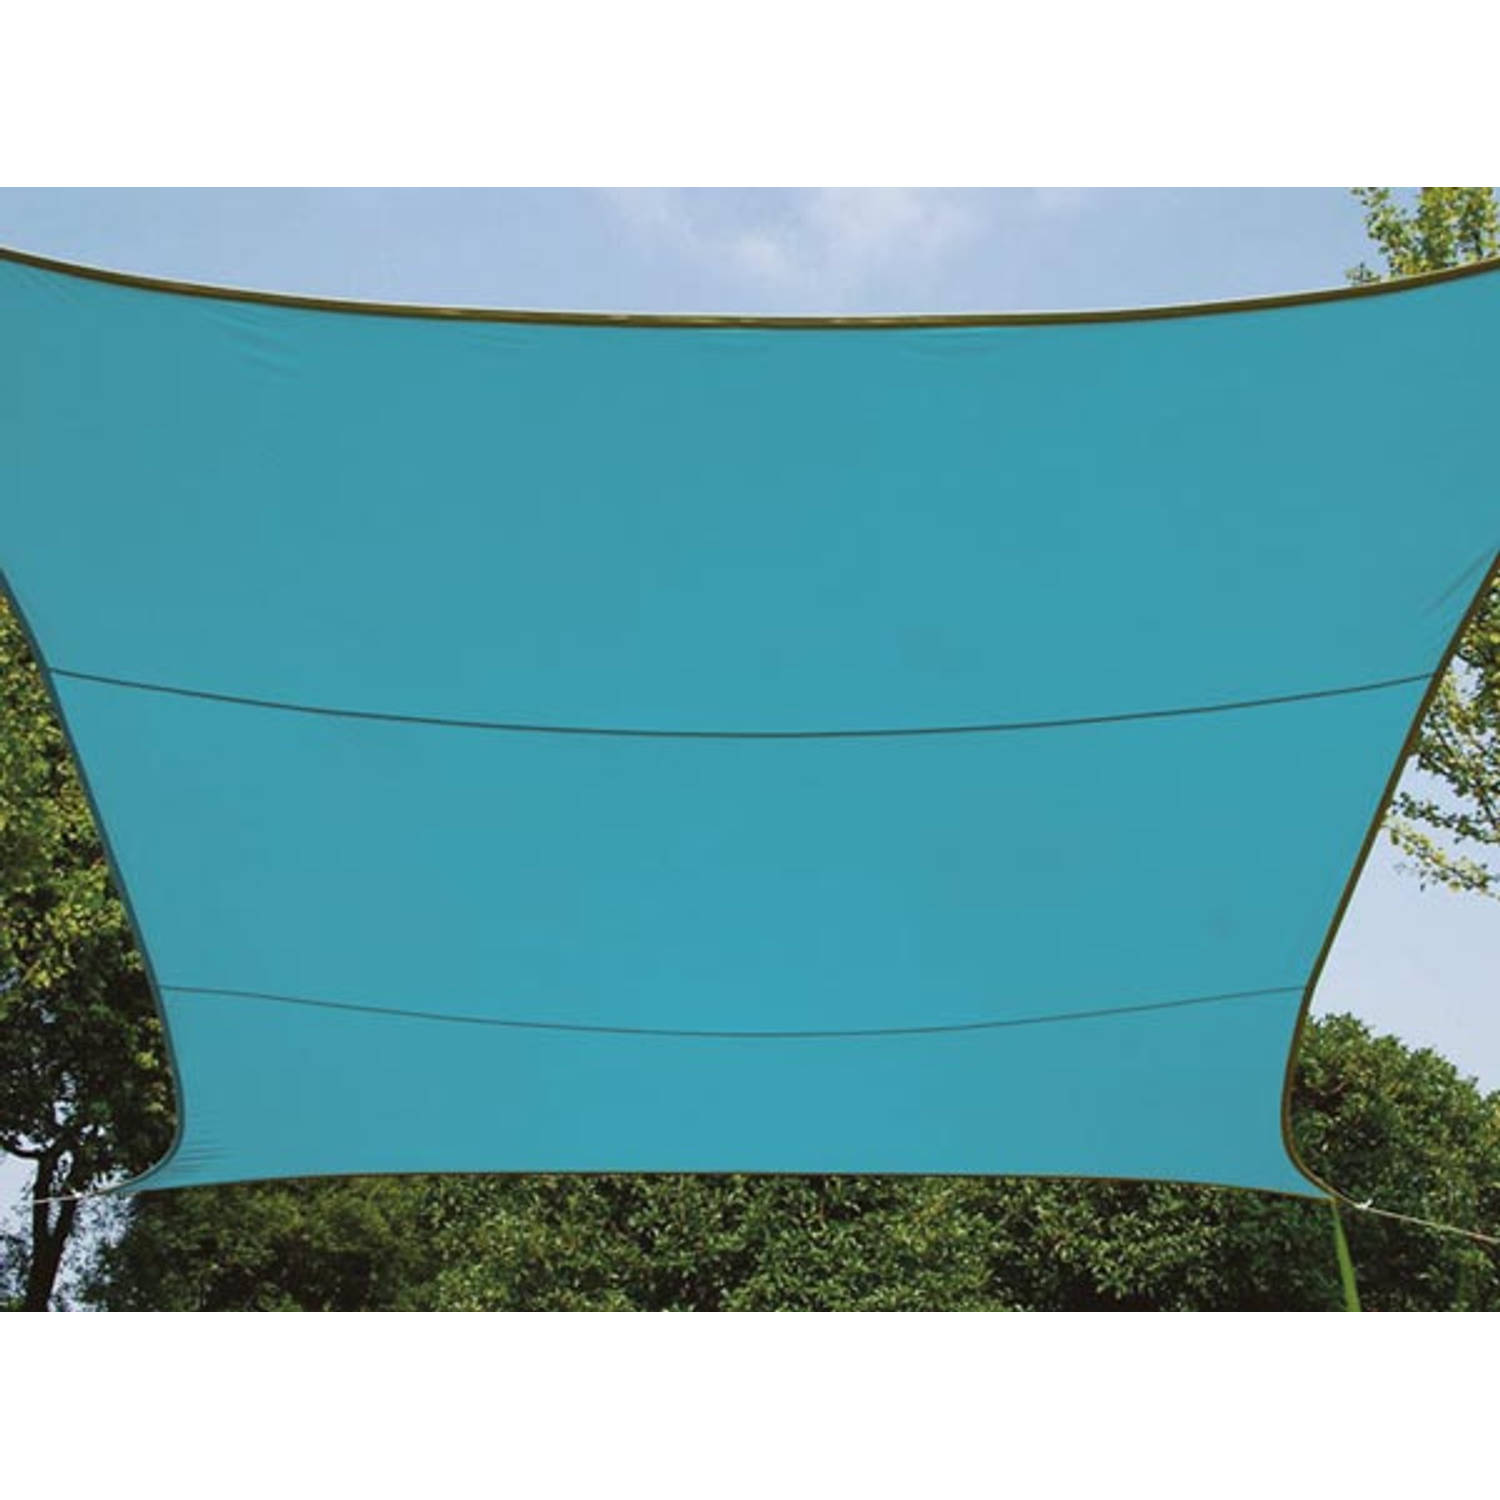 Weg huis Stimulans materiaal Perel schaduwdoek rechthoekig 4 x 2,9 m polyester blauw | Blokker